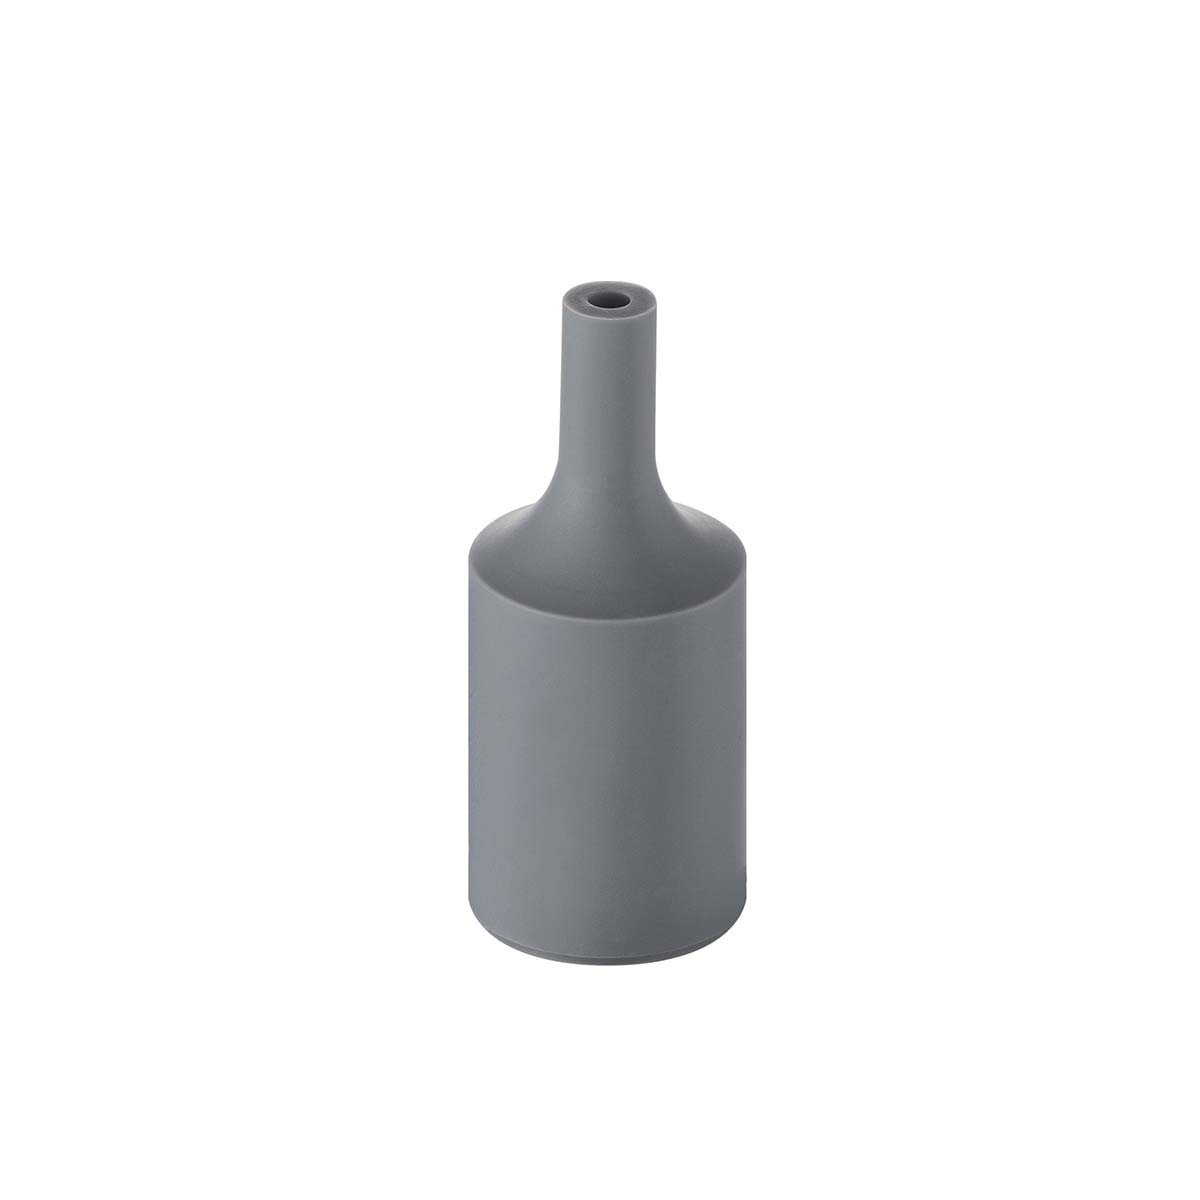 Tangla lighting - TLLH024GY - lamp holder silicon - E27 - bottle - grey